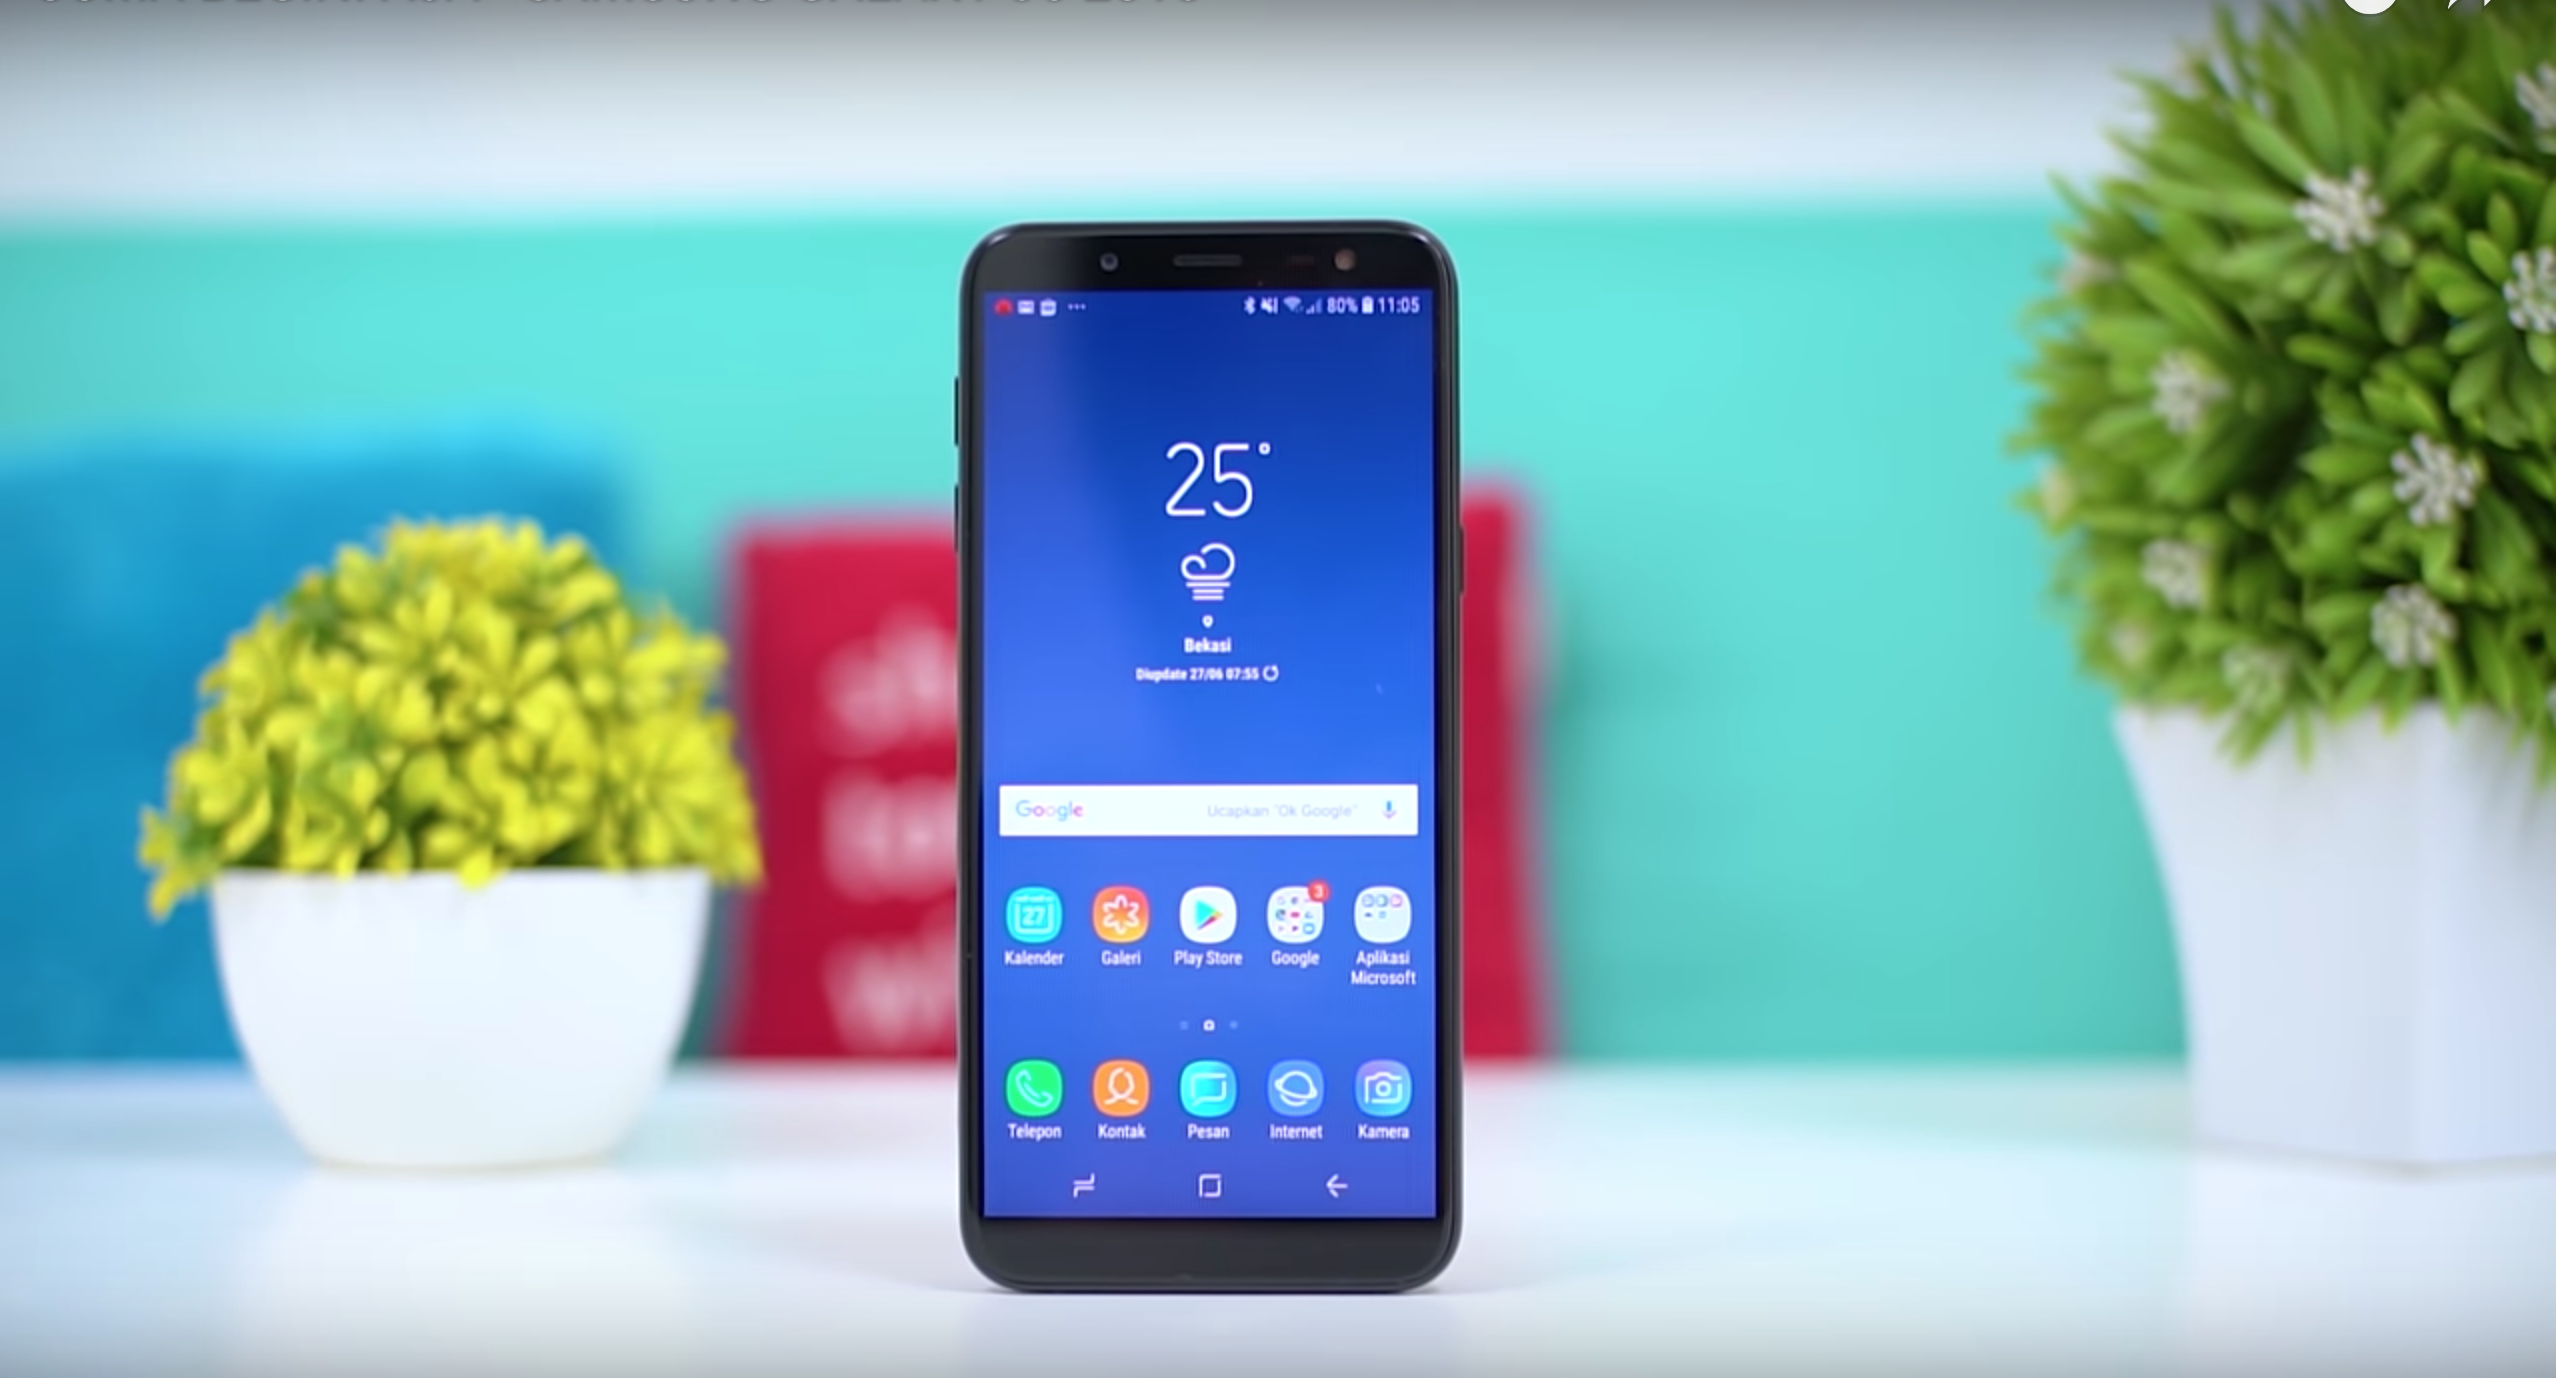 Smartfón Samsung Galaxy J6 (2018) - výhody a nevýhody